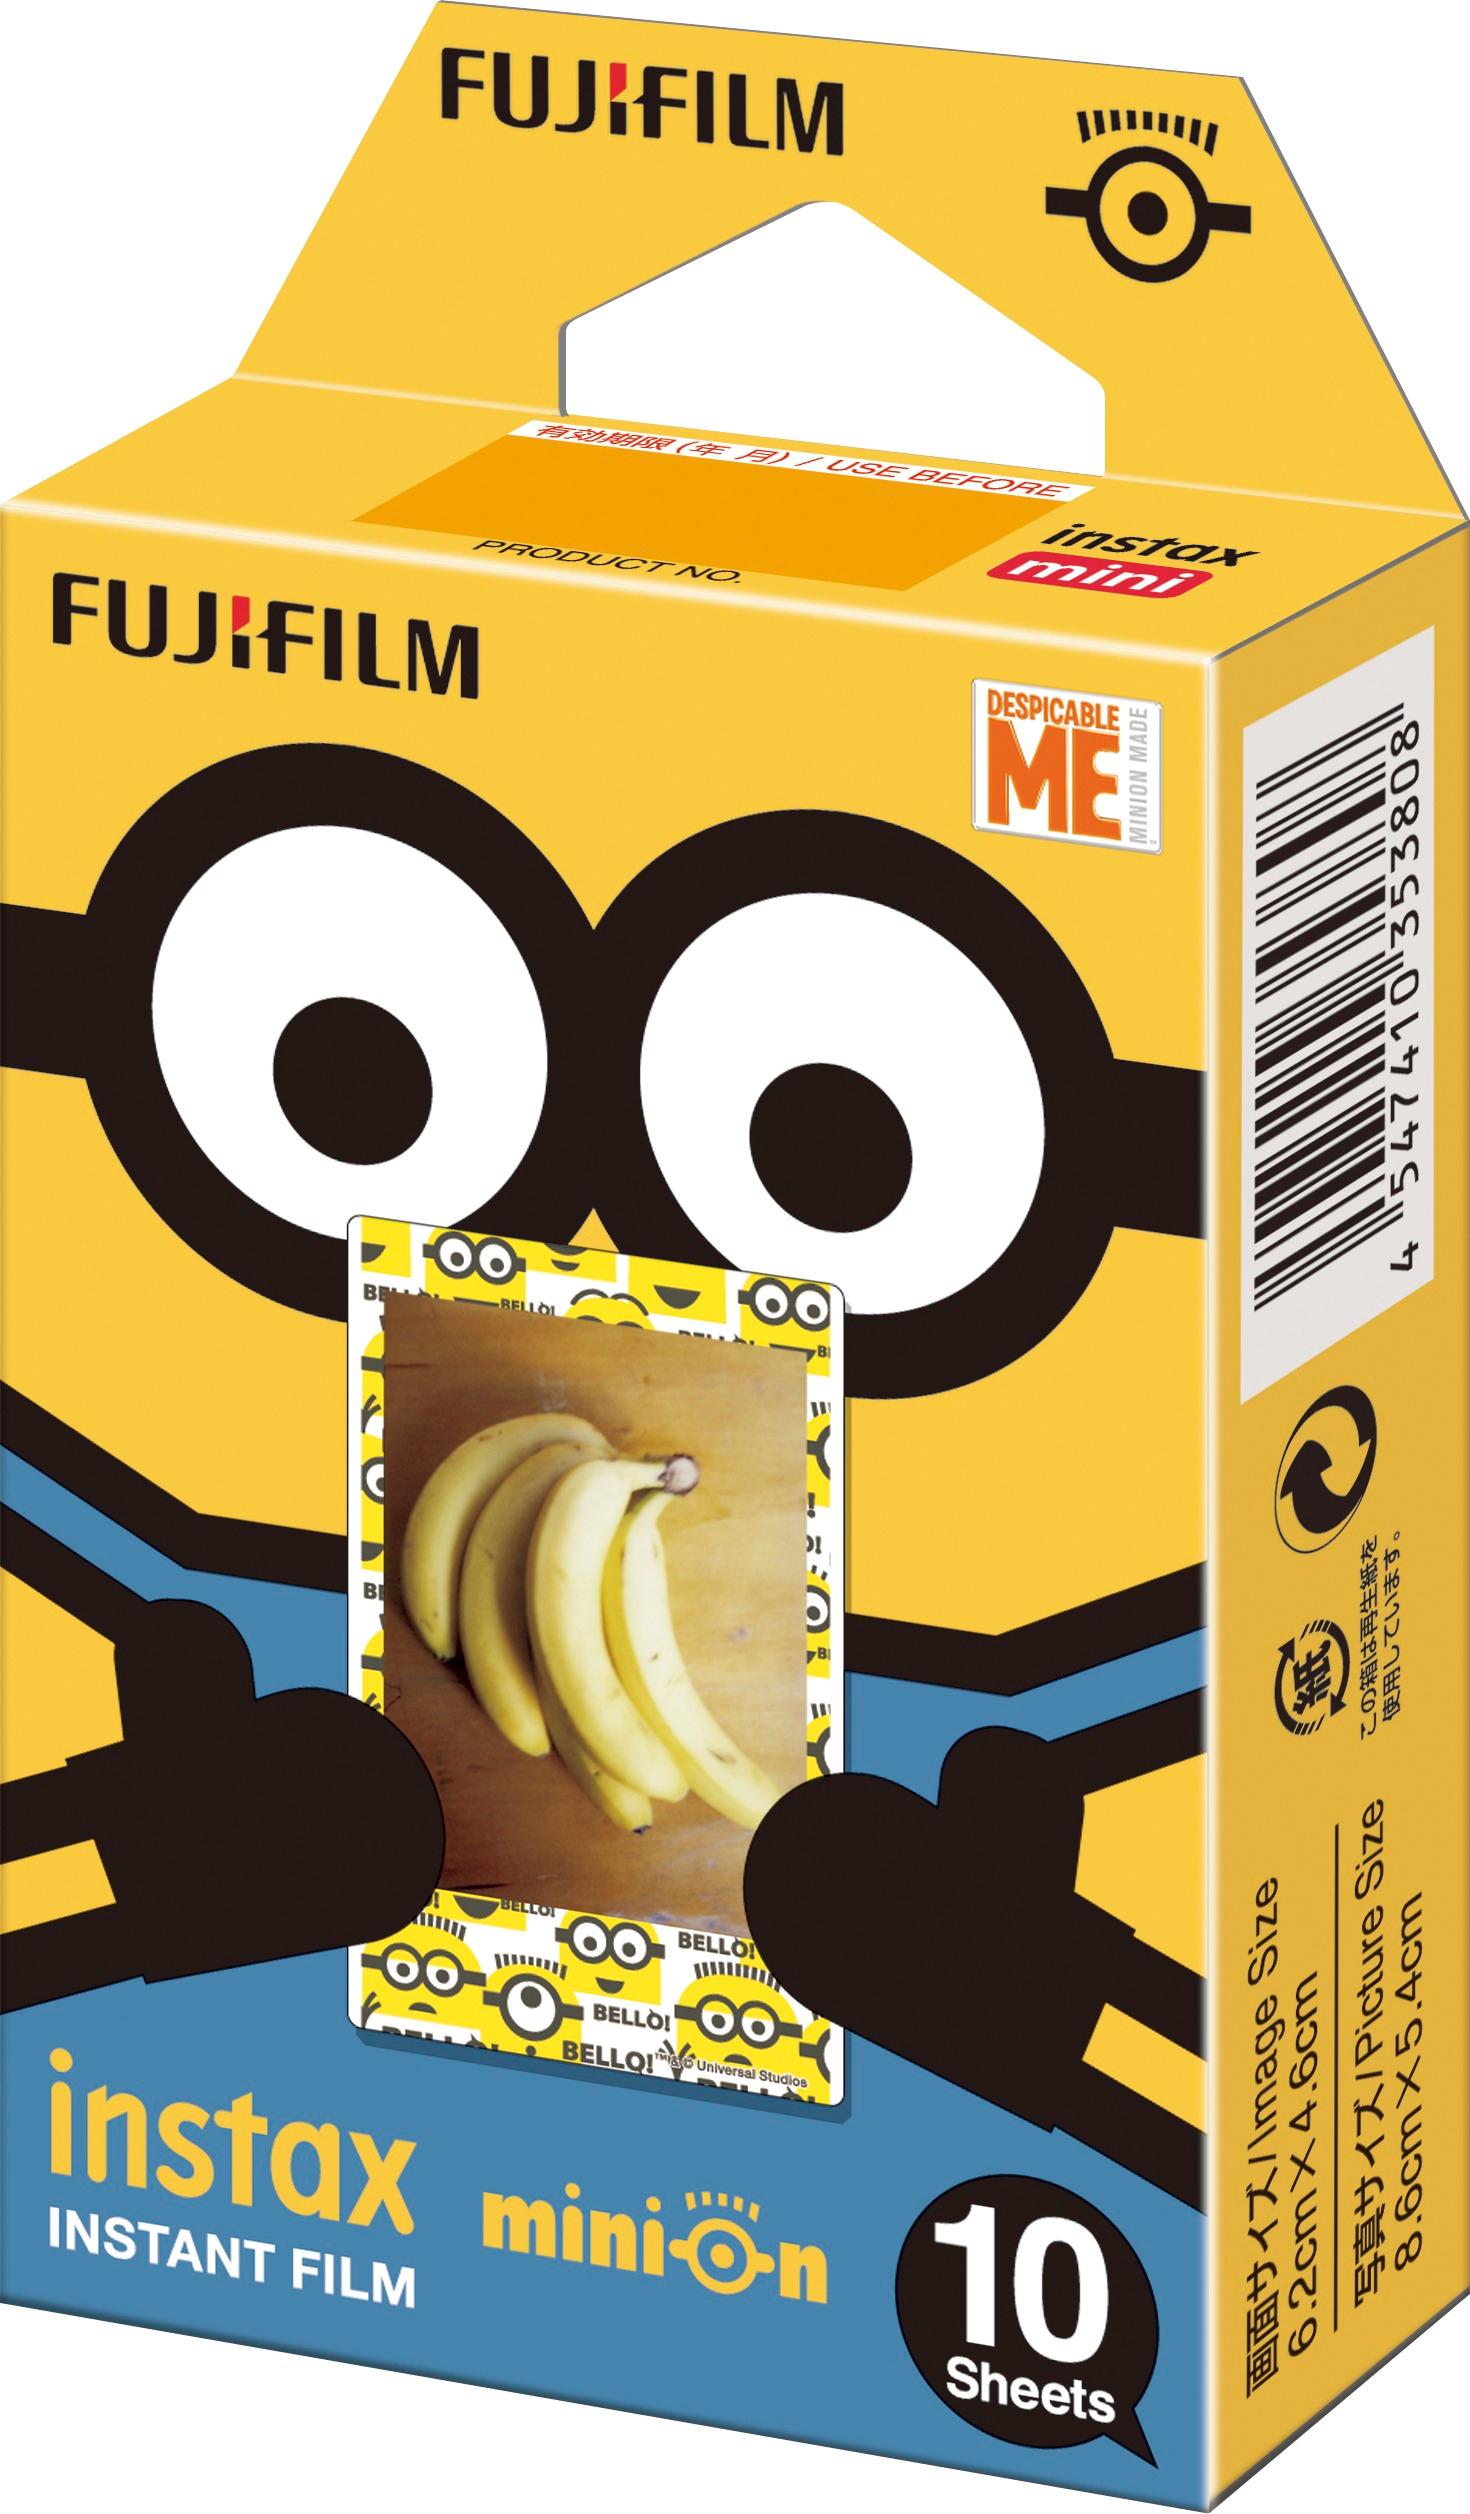 Faeröer herinneringen Verbazing Fujifilm Minion instax mini Film (10 Sheets) 16555198 - Best Buy